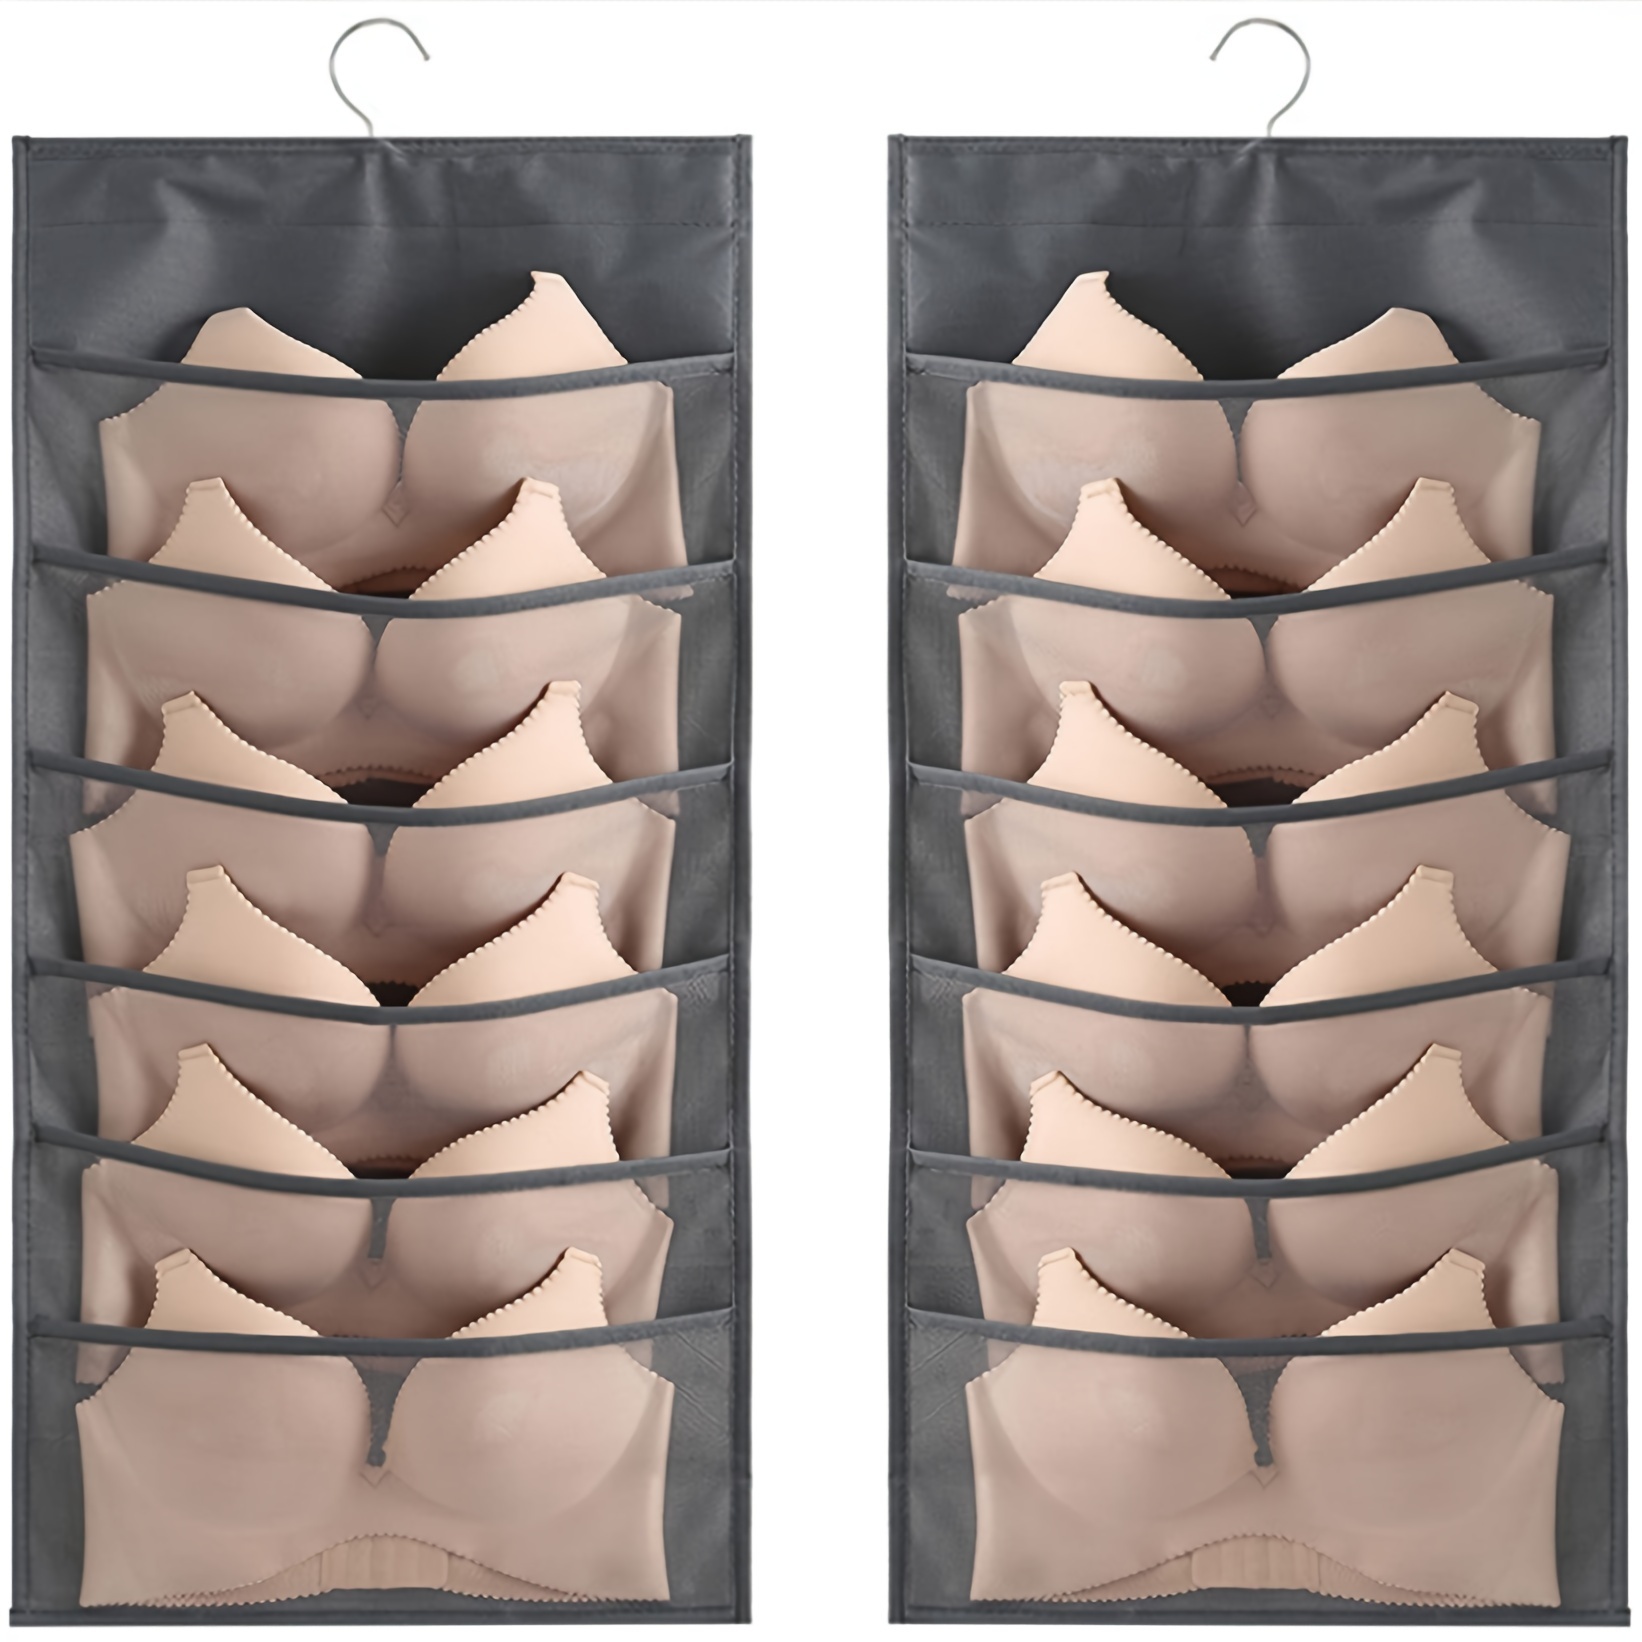 

1pc Double Sided Hanging Closet Bra Storage Organizer With 12 Mesh Pockets For Underwear, Wardrobe Wall Mounted Bra Storage Bag, Space Saving Storage Organizer